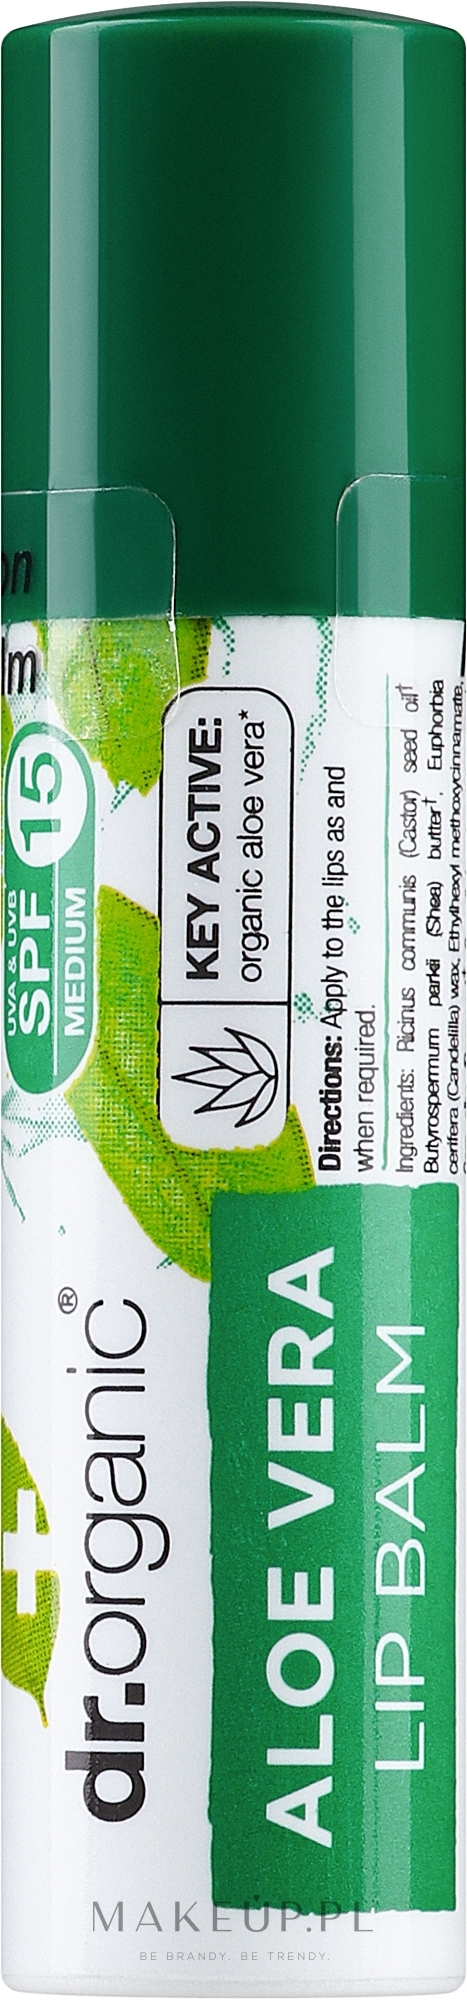 Balsam do ust z aloesem - Dr Organic Bioactive Skincare Aloe Vera Lip Care Stick SPF15 — Zdjęcie 5.7 ml